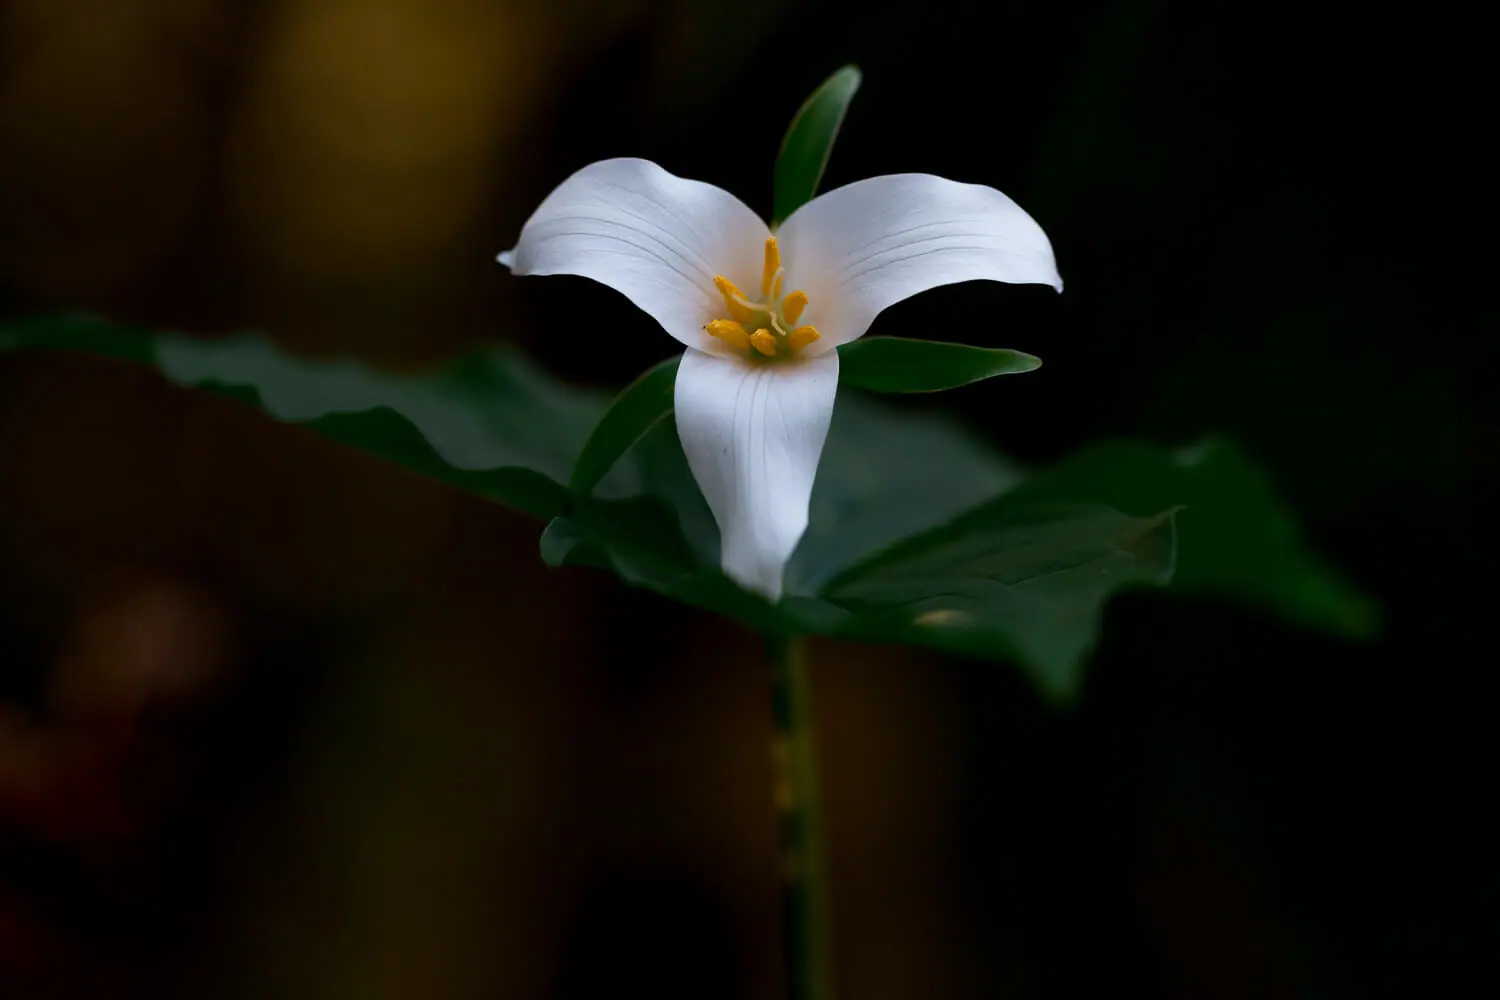 A single white trillium flower against a dark background.